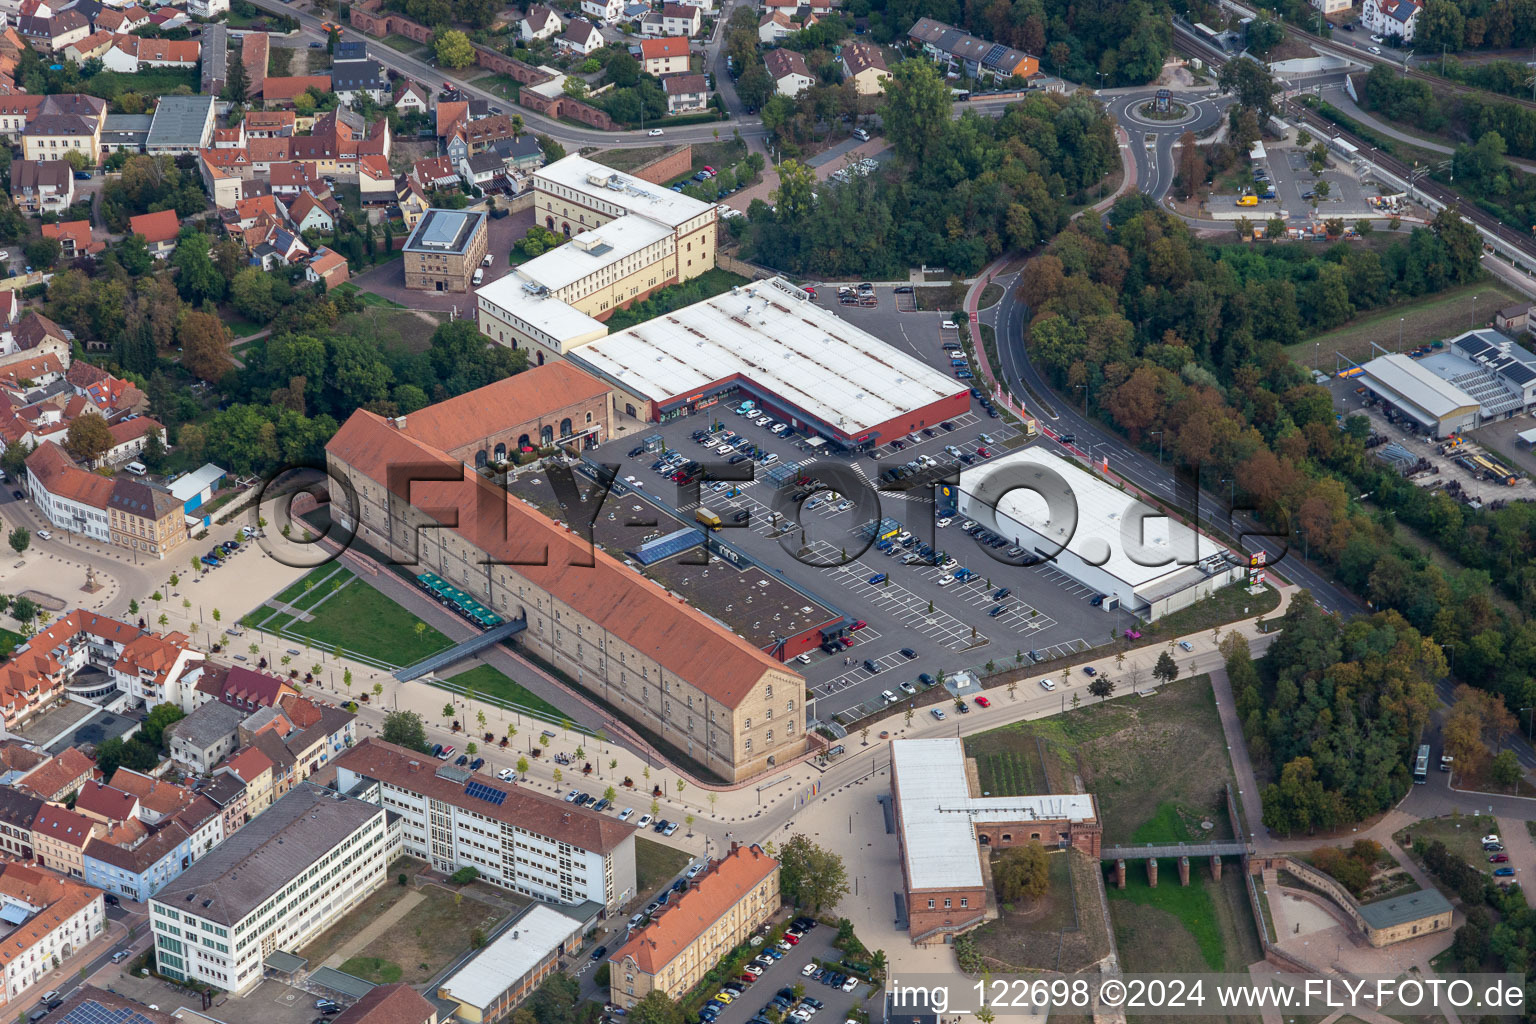 FMZ city barracks with vocational school on Paradeplatz in Germersheim in the state Rhineland-Palatinate, Germany